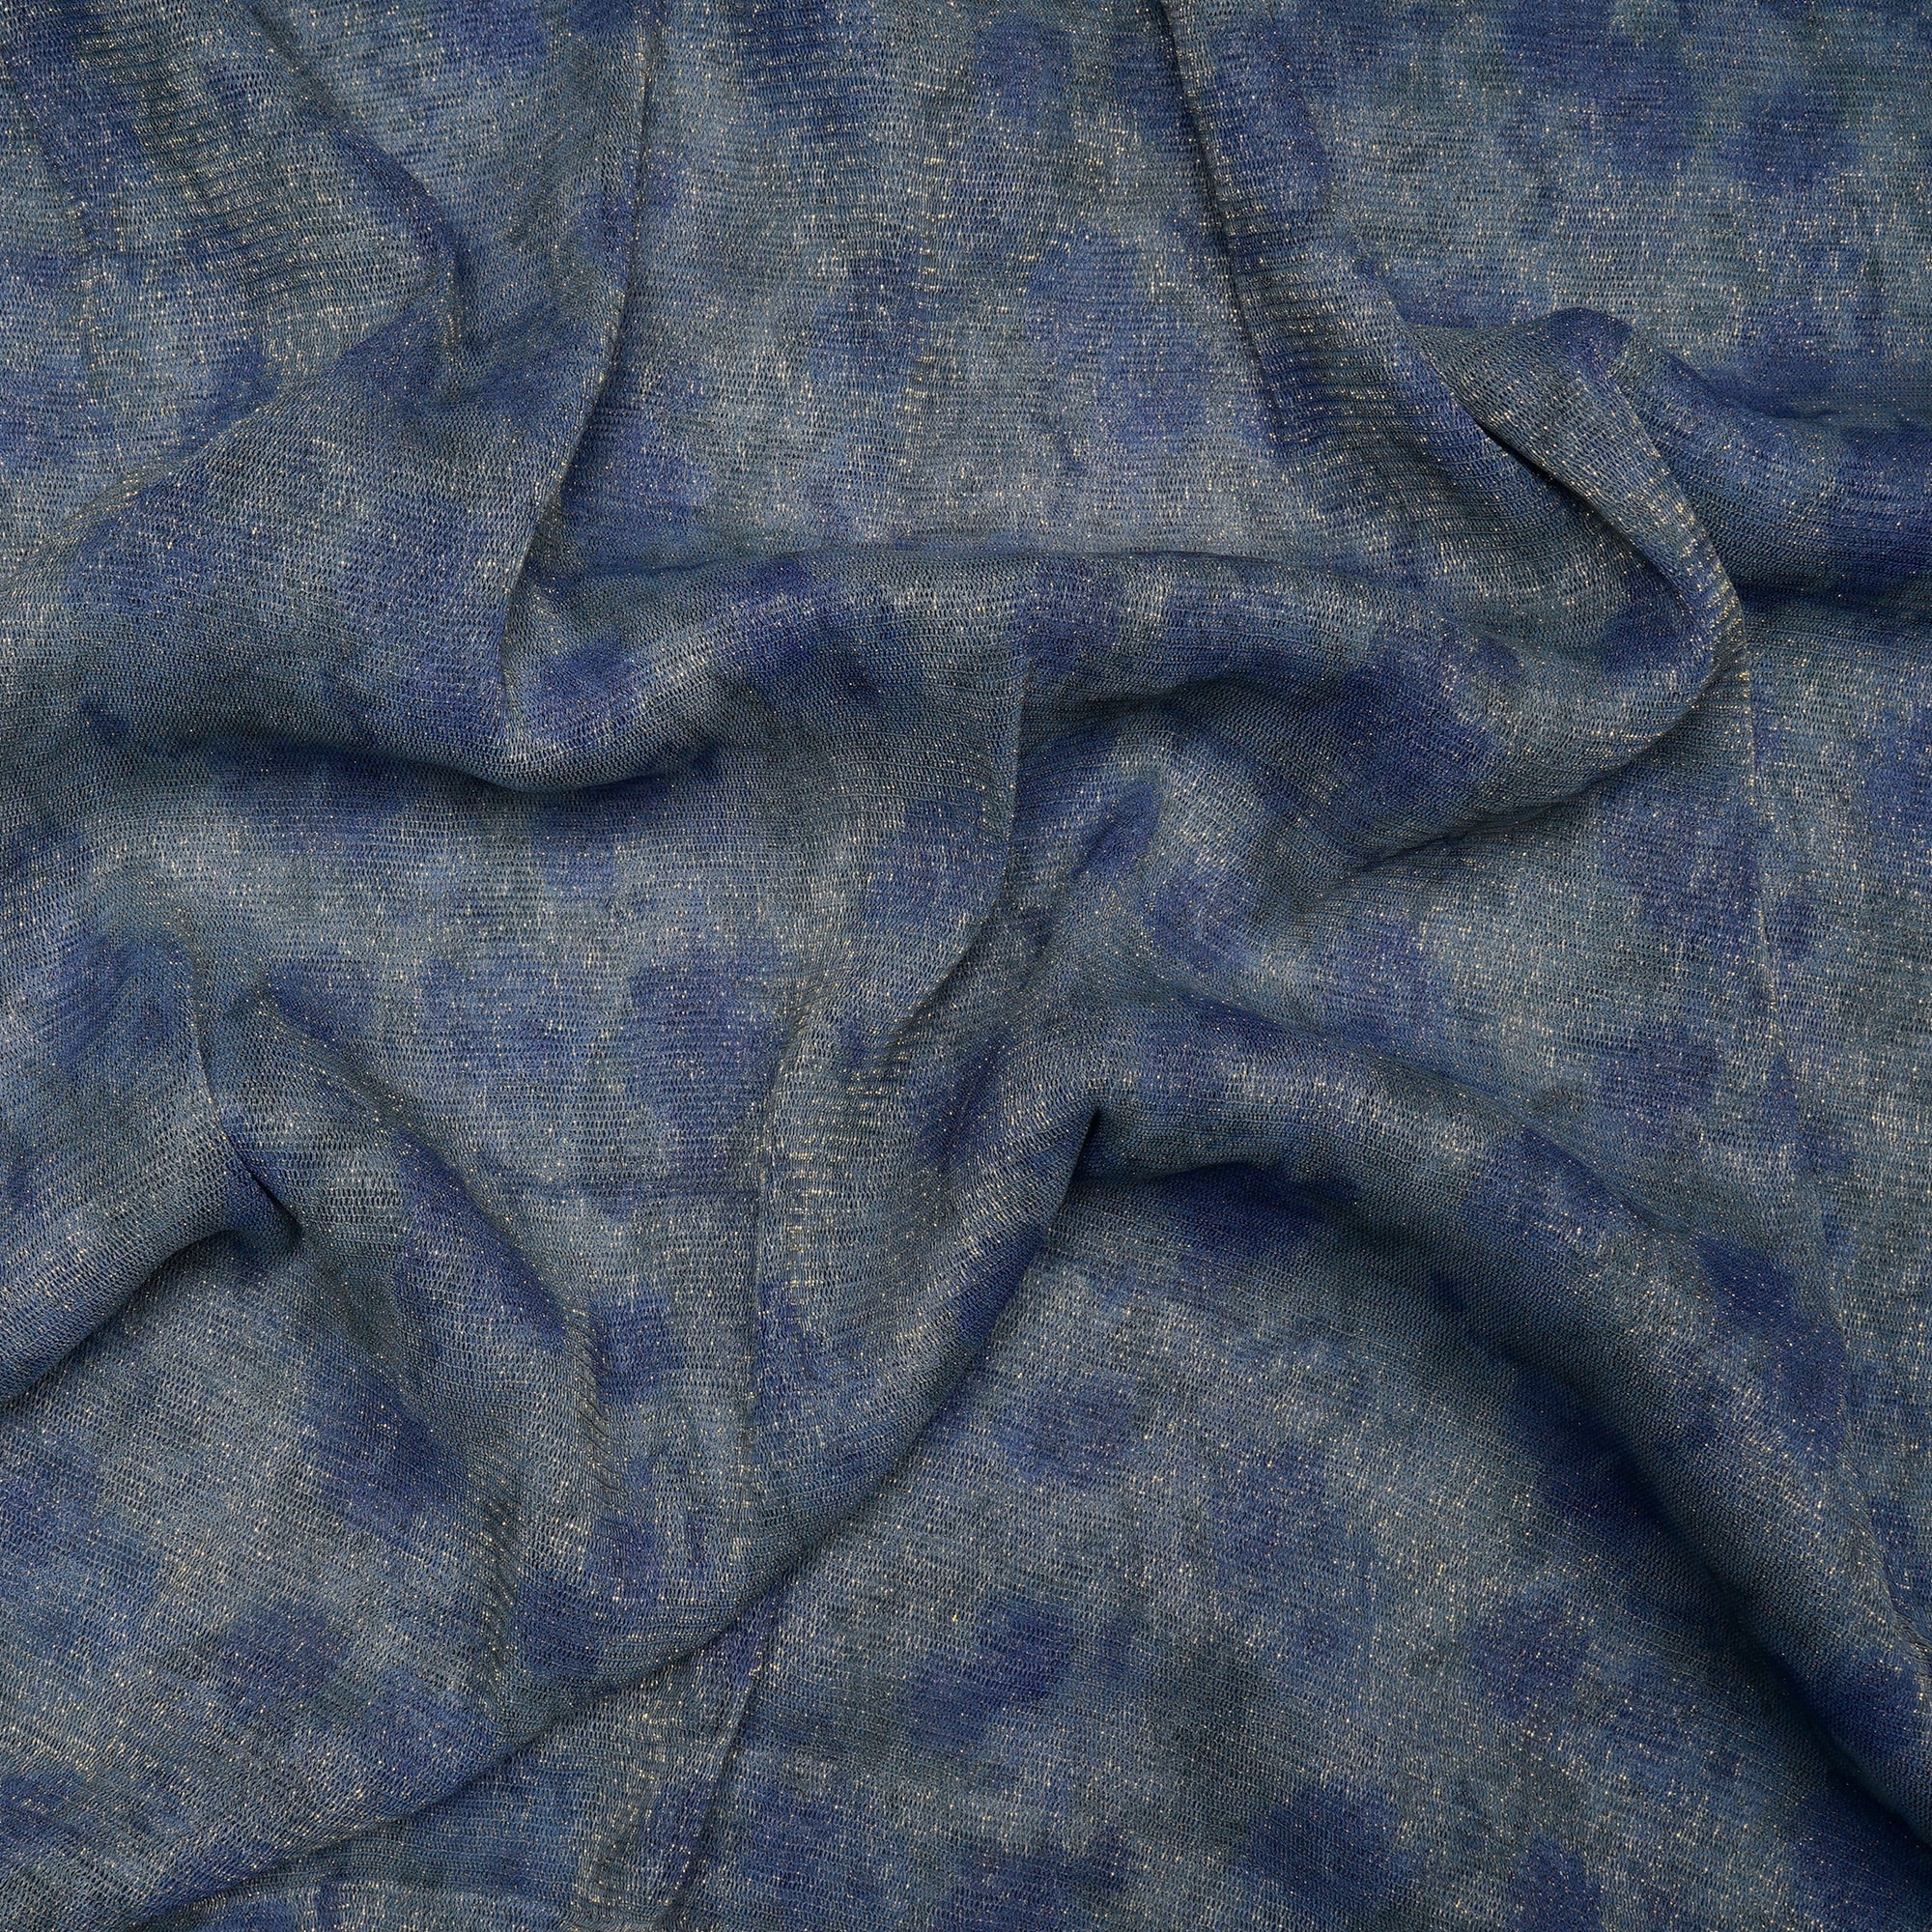 Grey-Blue Color Printed Nylon Net Fabric